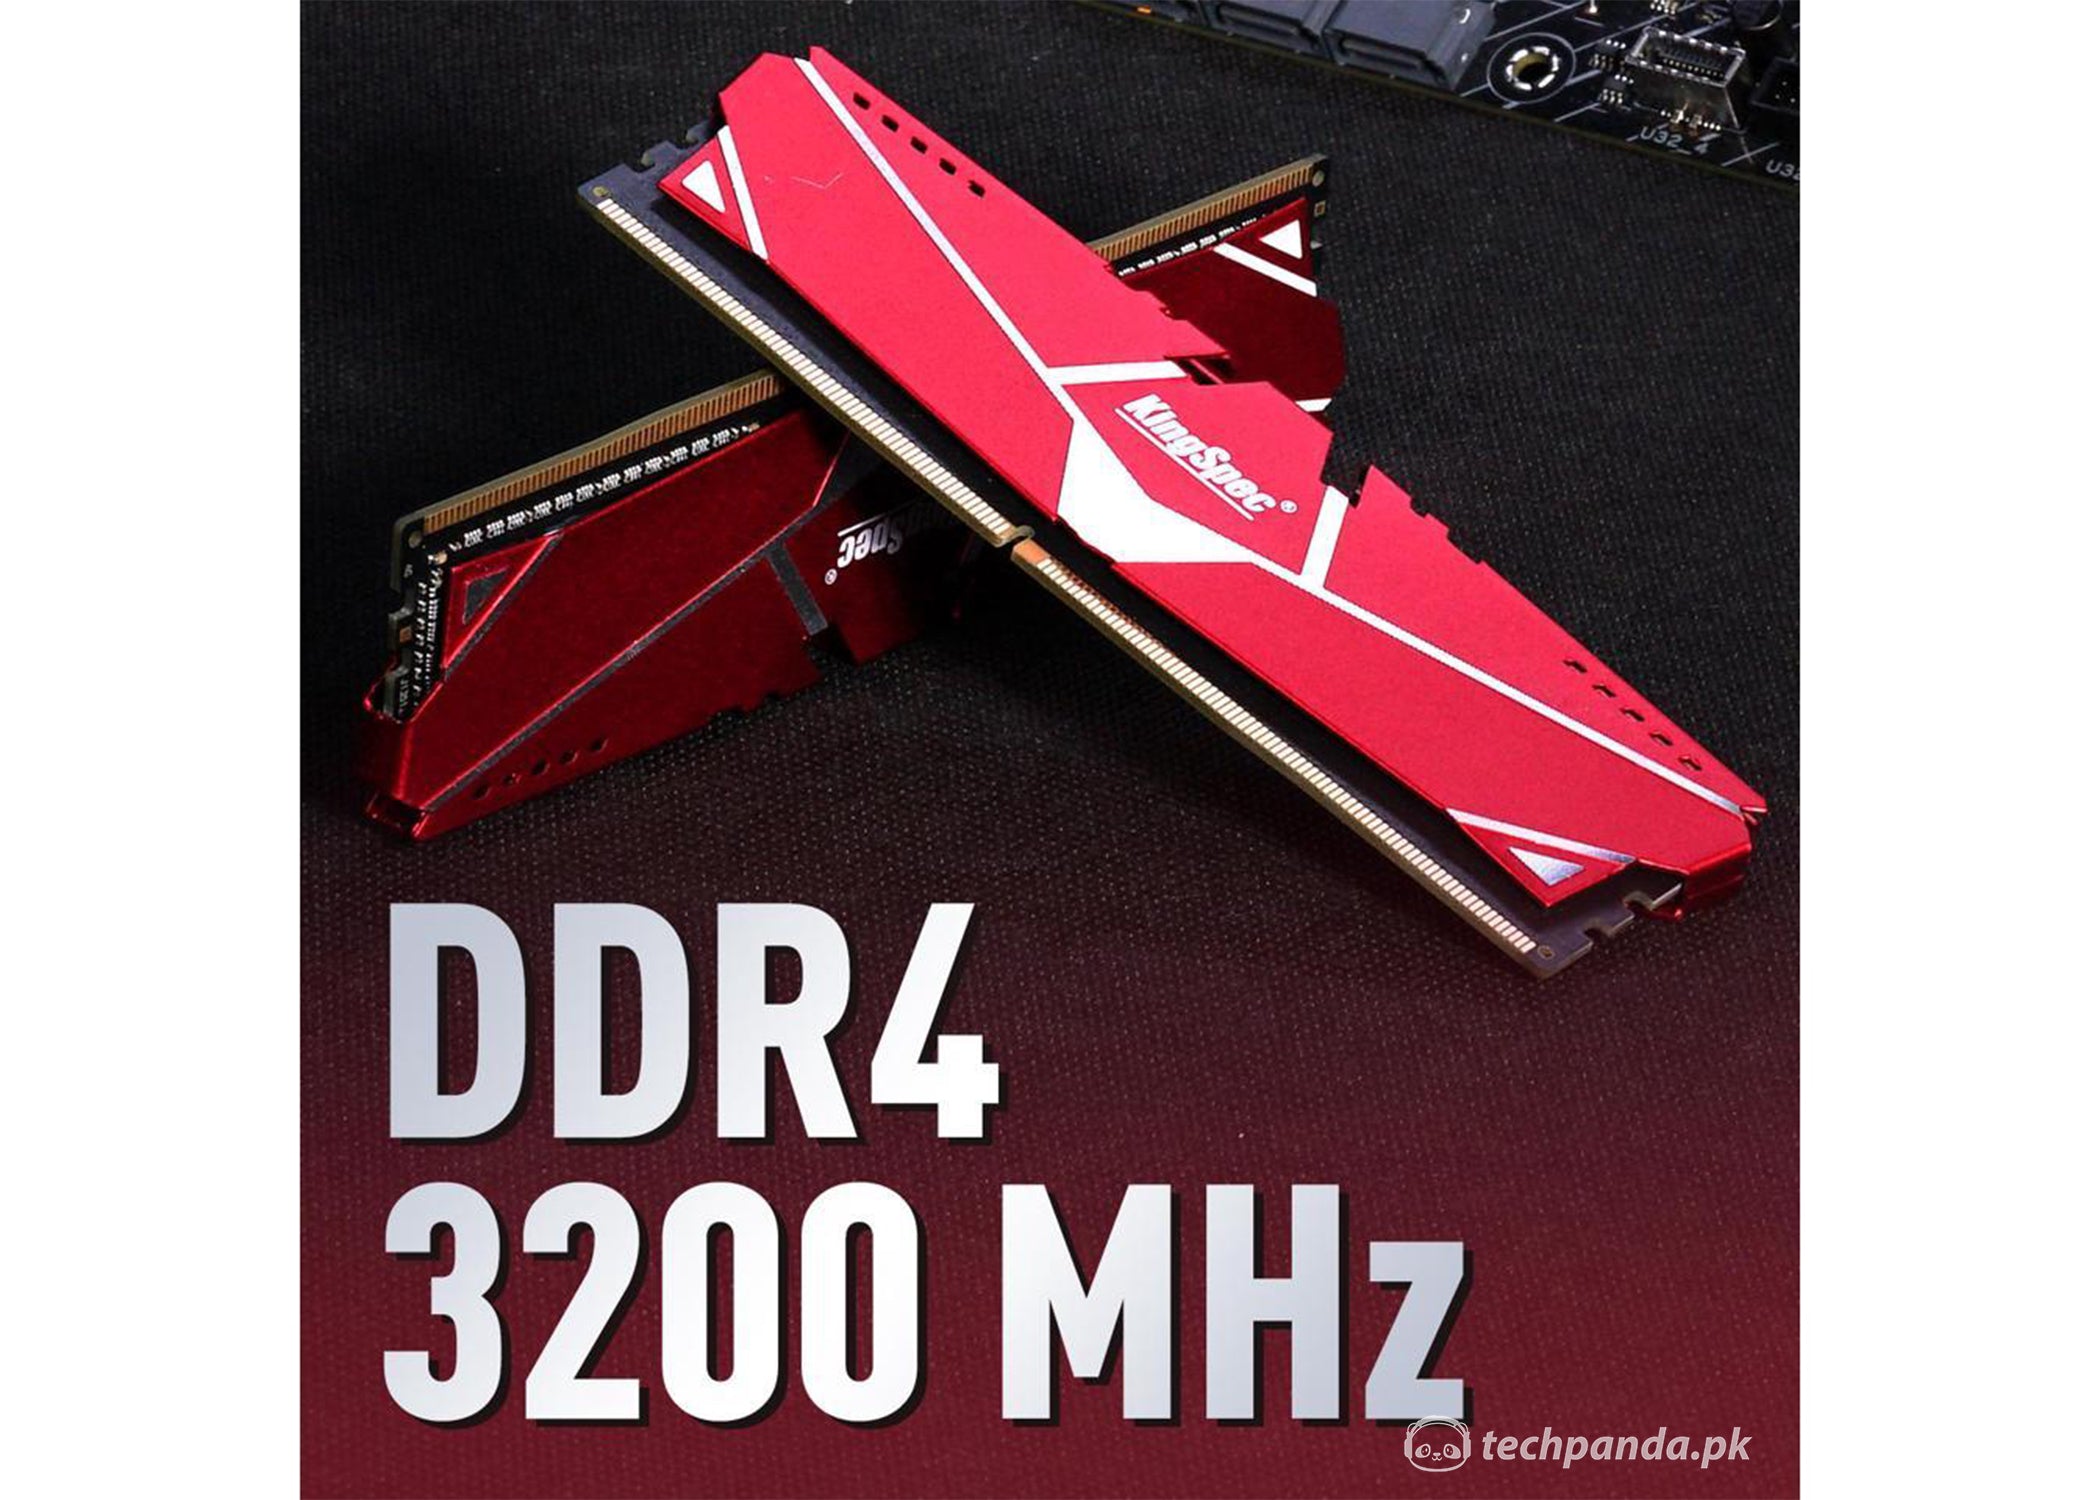 KingSpec DDR4 RAM 16GB Memory Module 3200 MHz 288-Pin UDIMM with Heatsink for Computer Desktop PC Memories Module Gaming